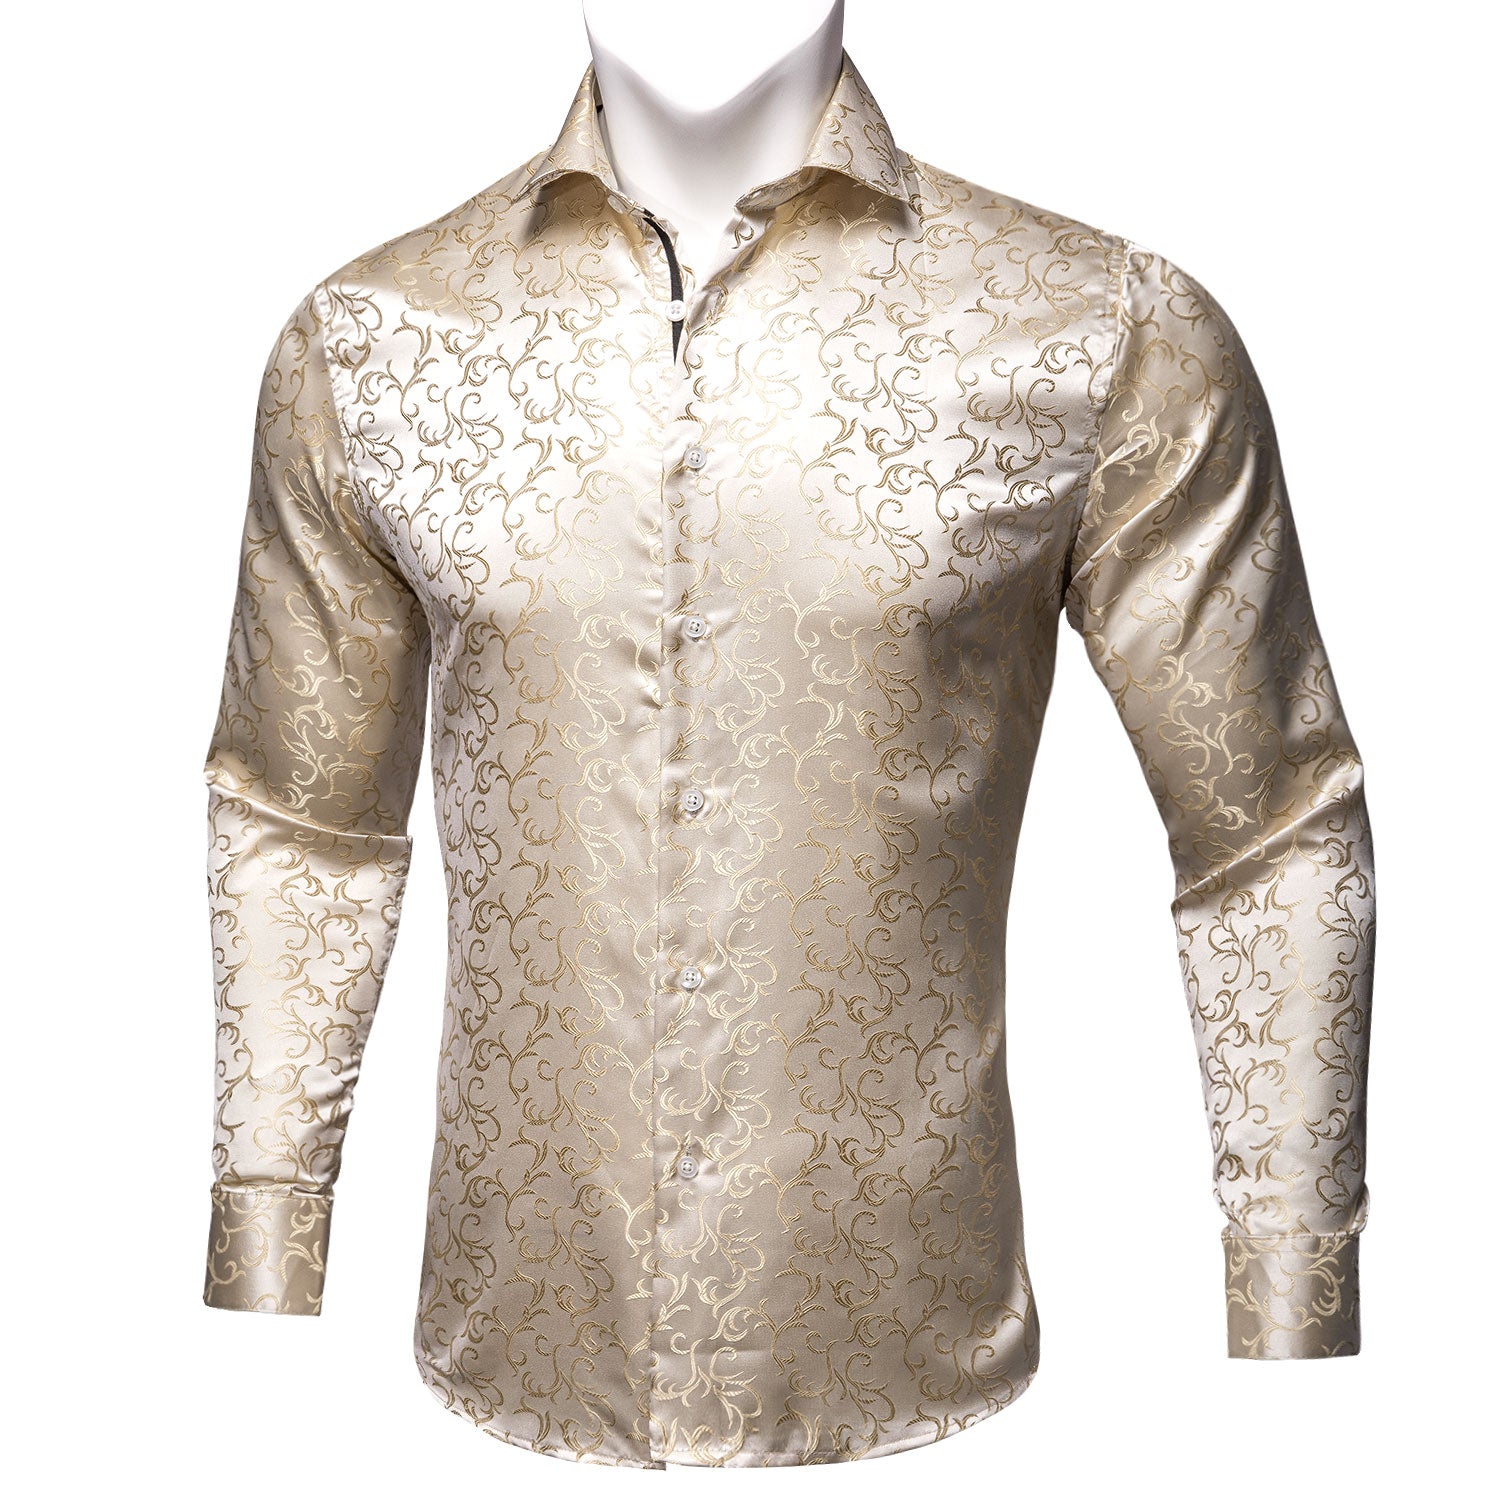 Barry.wang Champagne Gold Paisley Silk Men's Long Sleeve Shirt